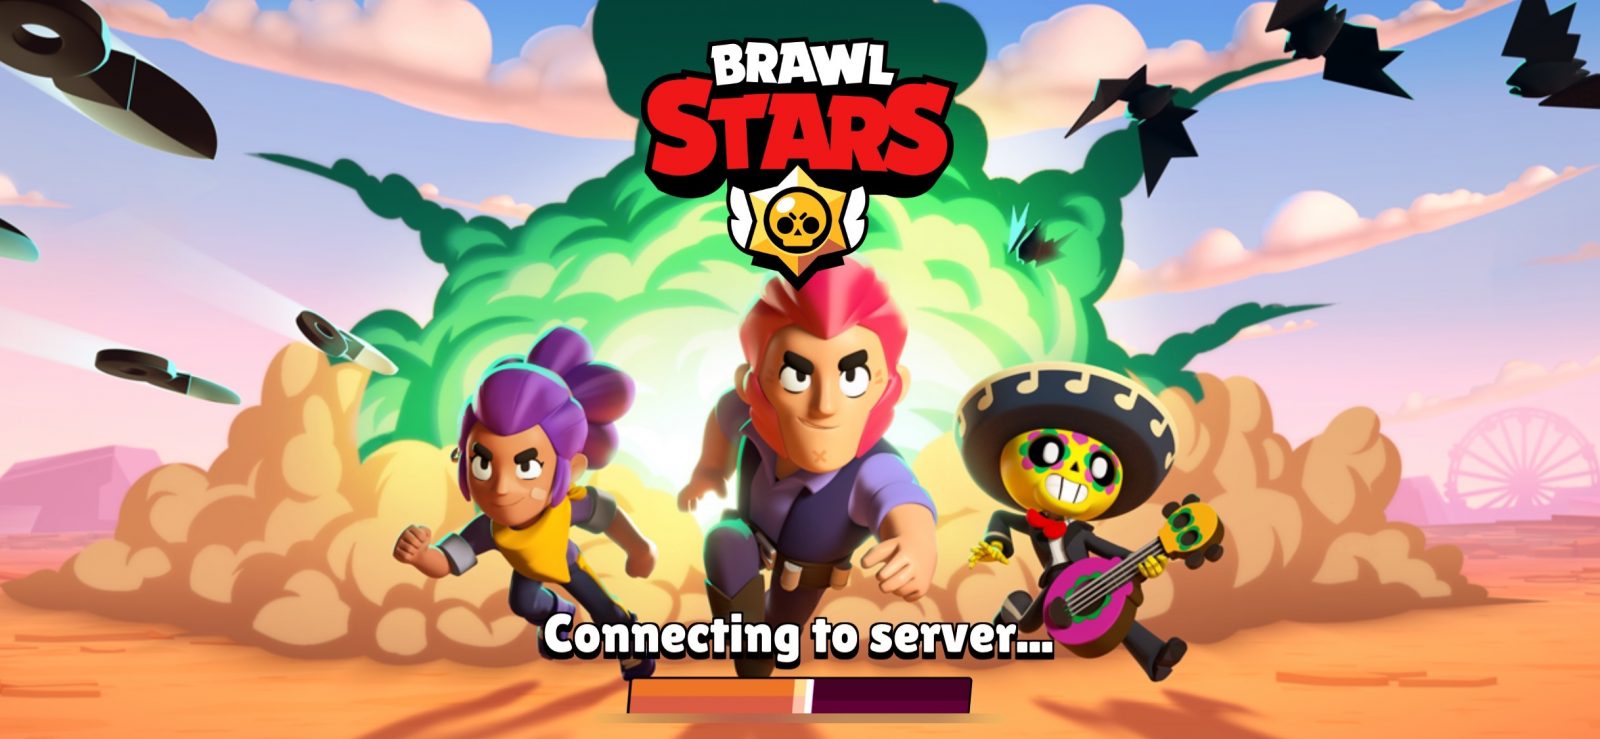 Brawl Stars The Casual App Gamer - delete brawl stars account